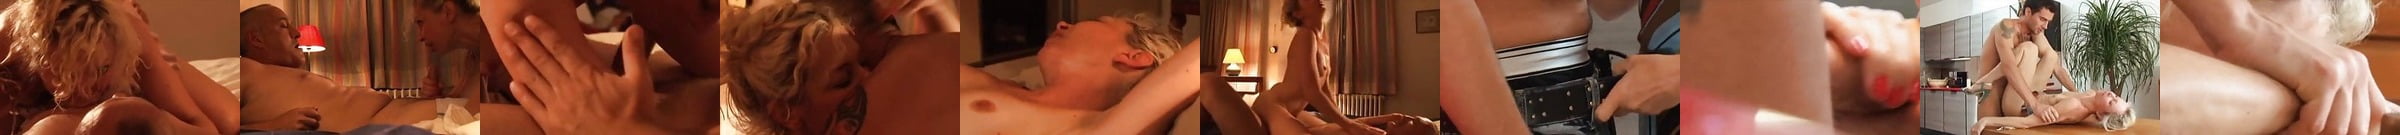 Margo Stilley 9 Songs Free Nude Porn Video 8a Xhamster De